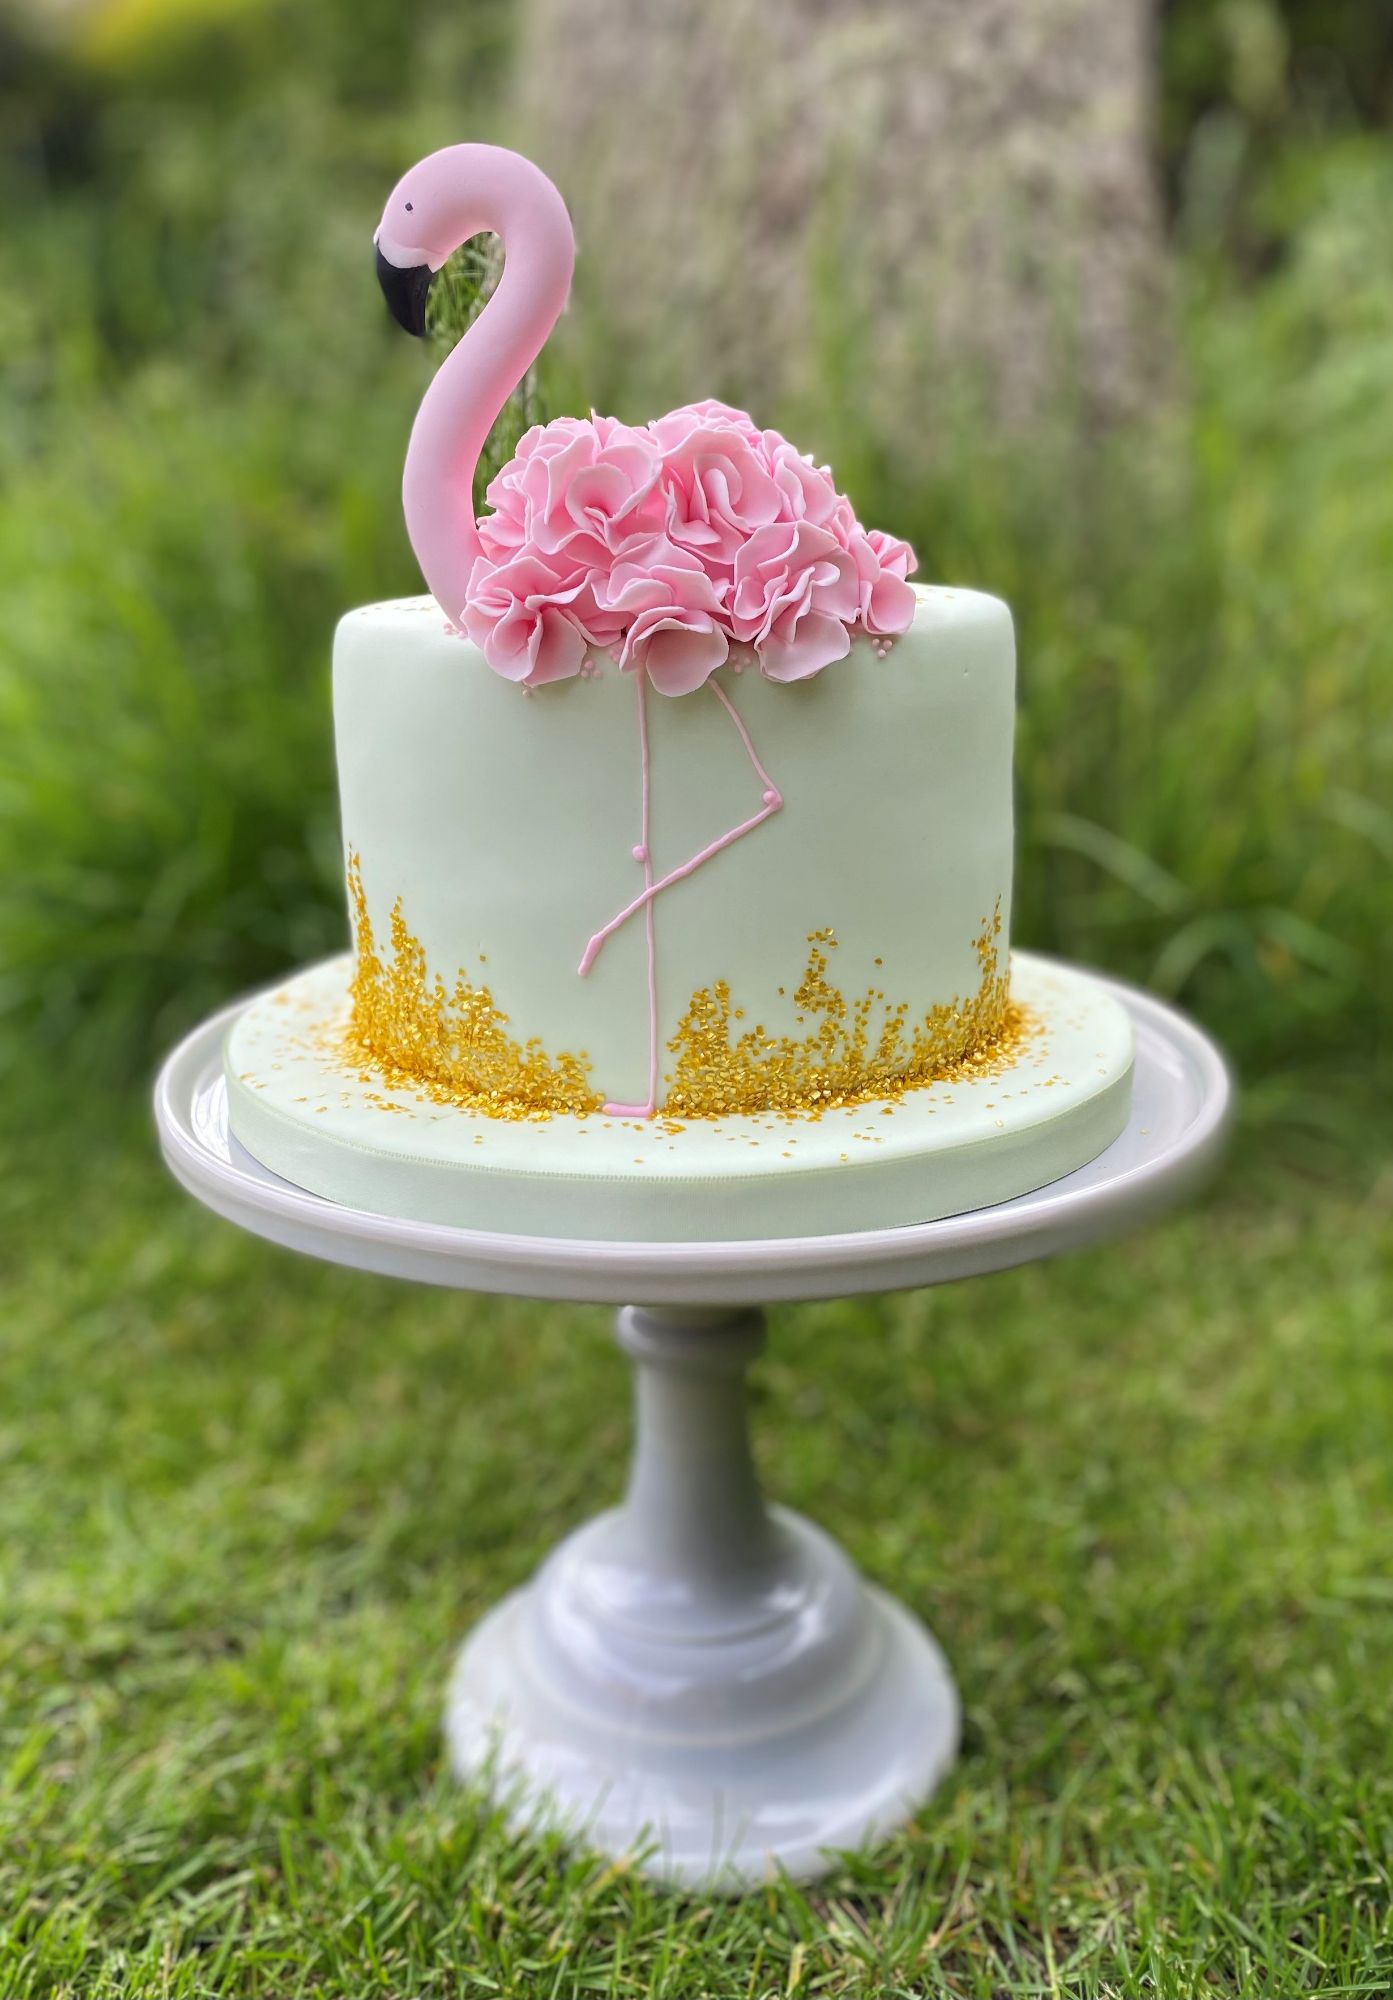 Helen Jane Cake Design, Christchurch, Dorset - celebration cakes (14)